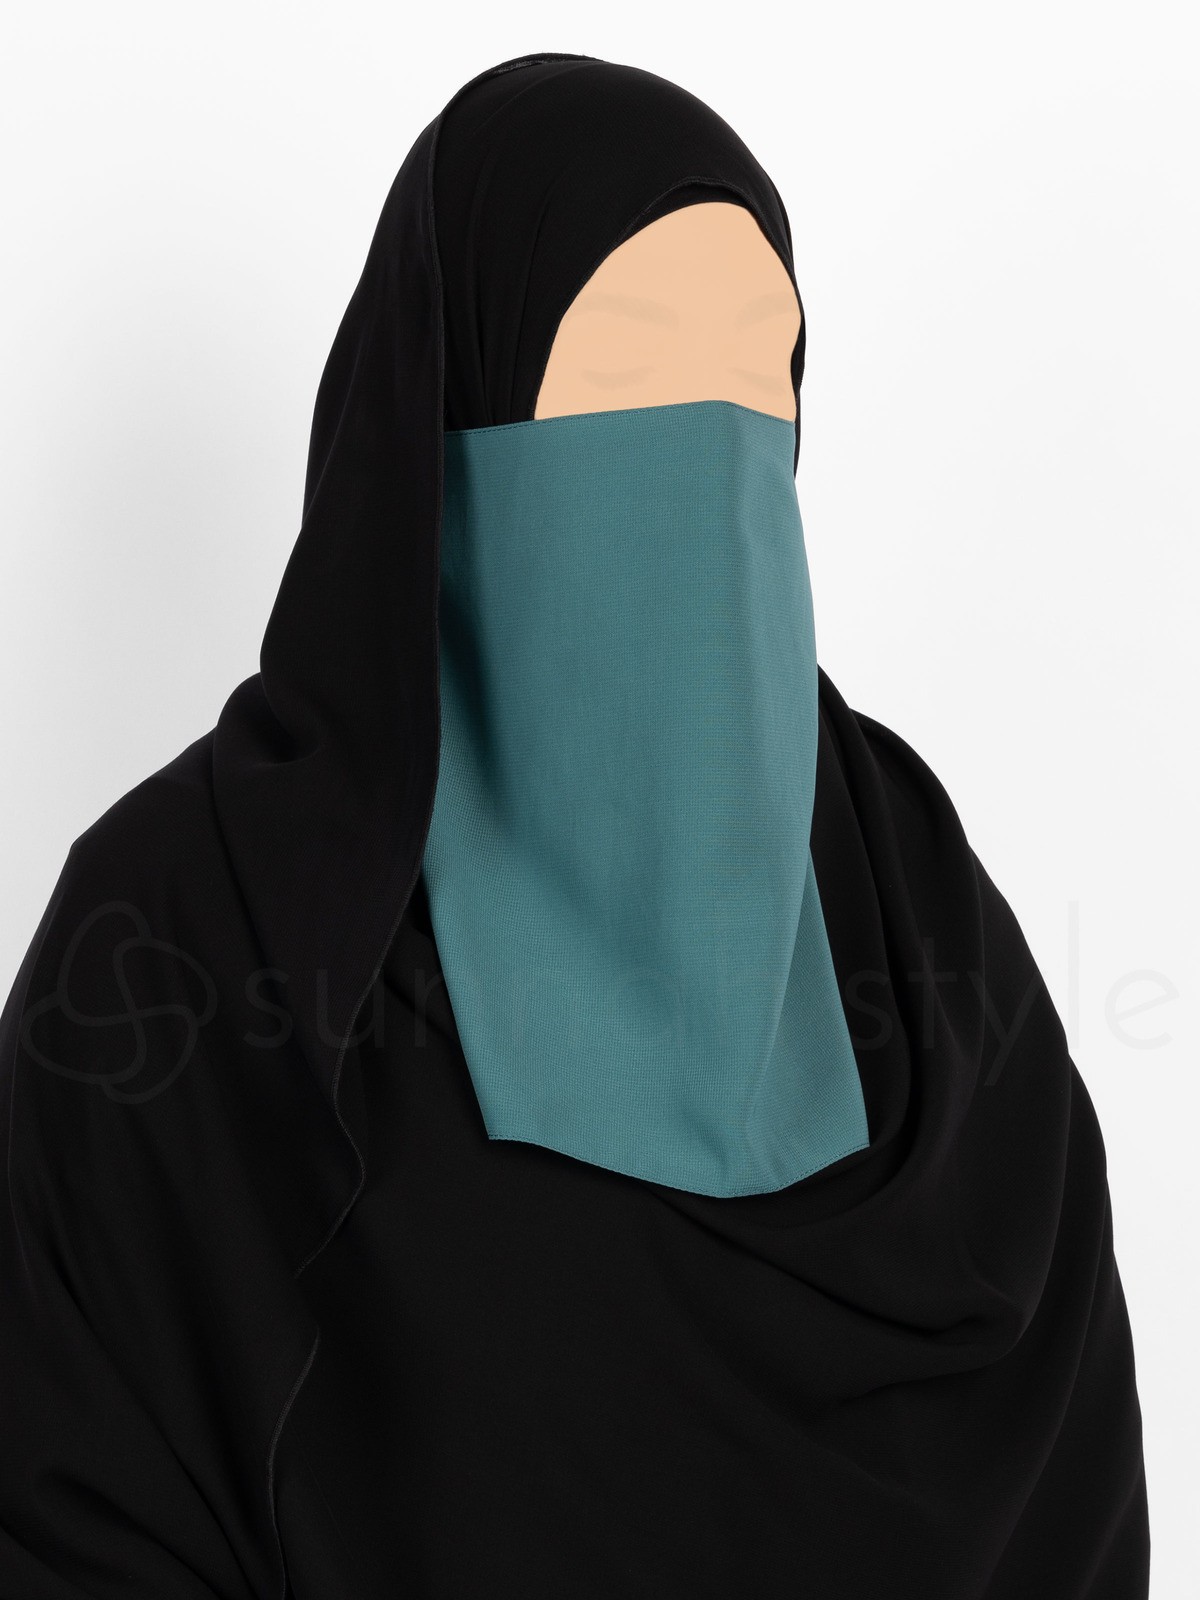 Sunnah Style - Elastic Half Niqab (Dark Grey)